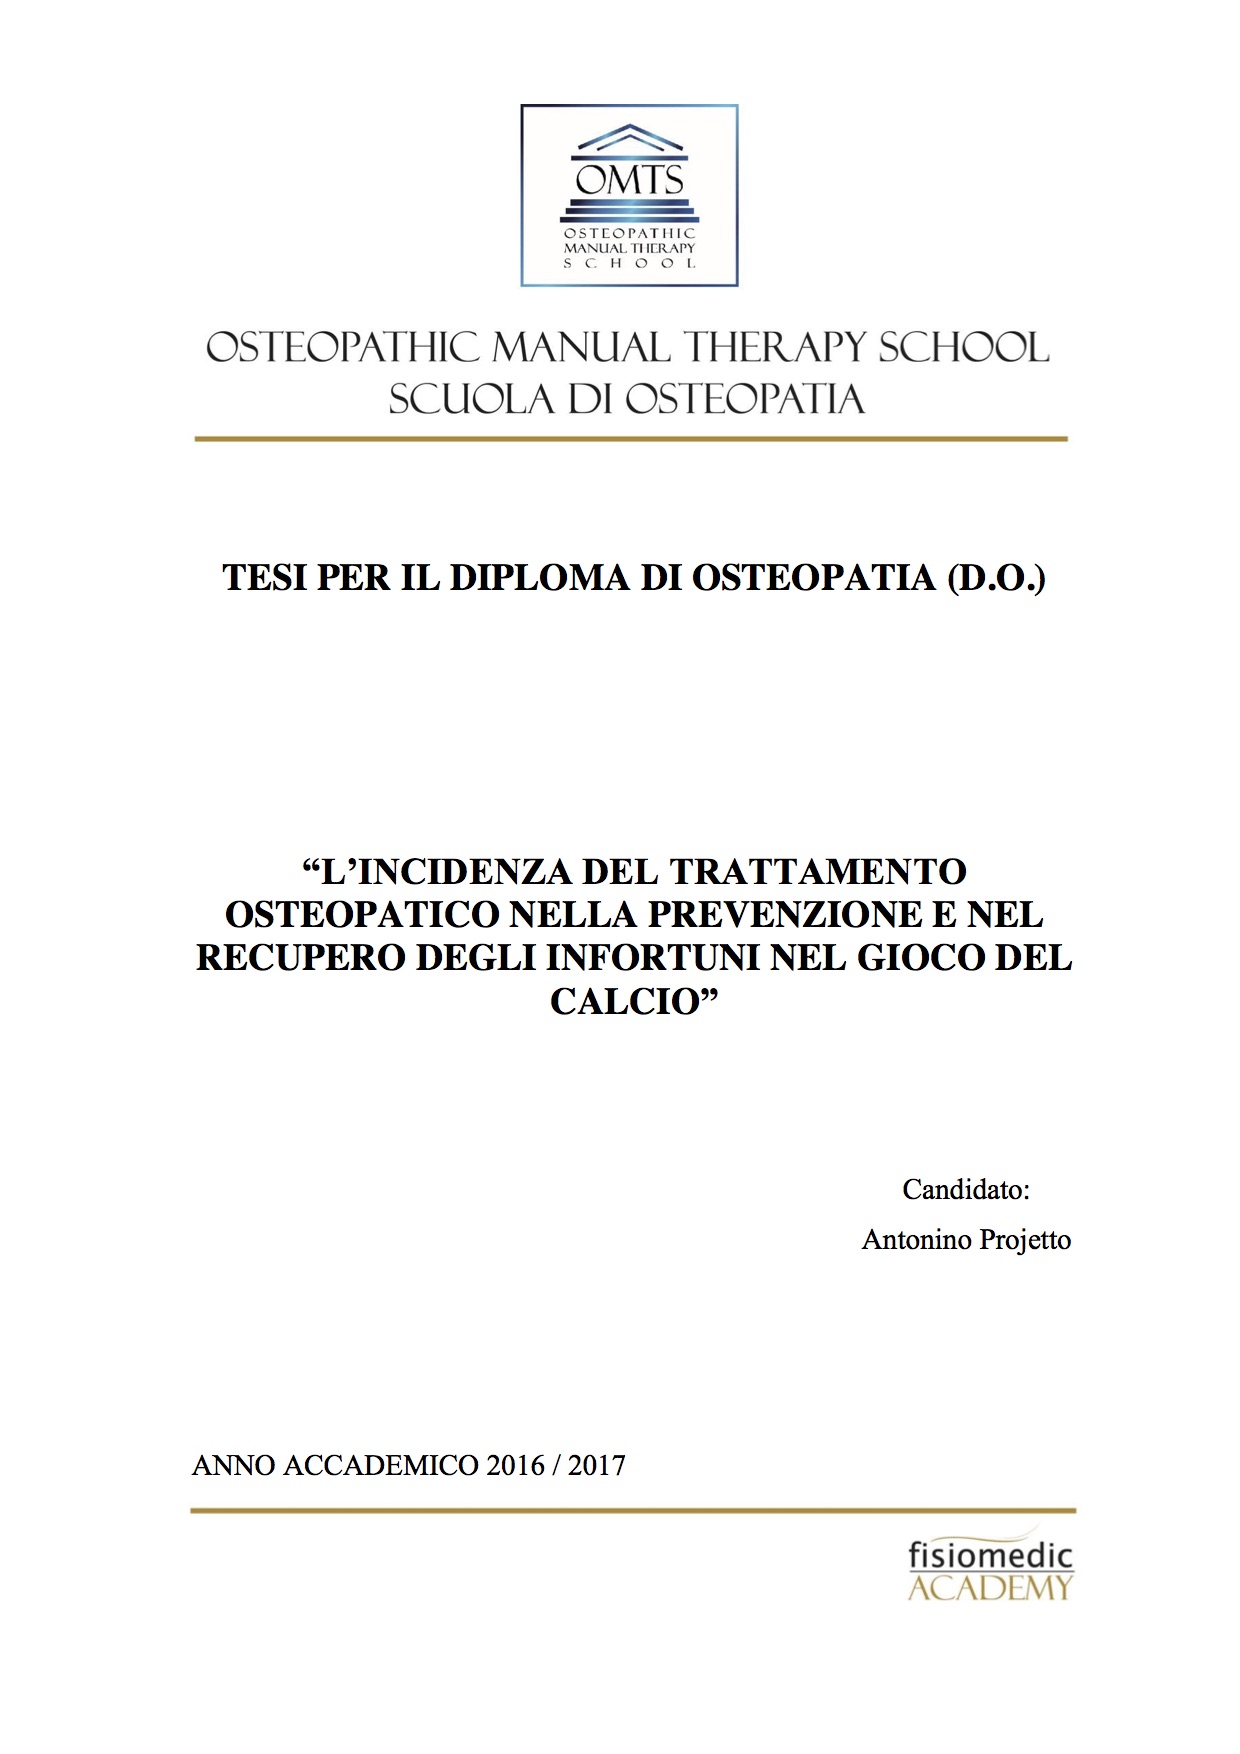 Antonino Projetto Tesi Diploma Osteopatia 2017